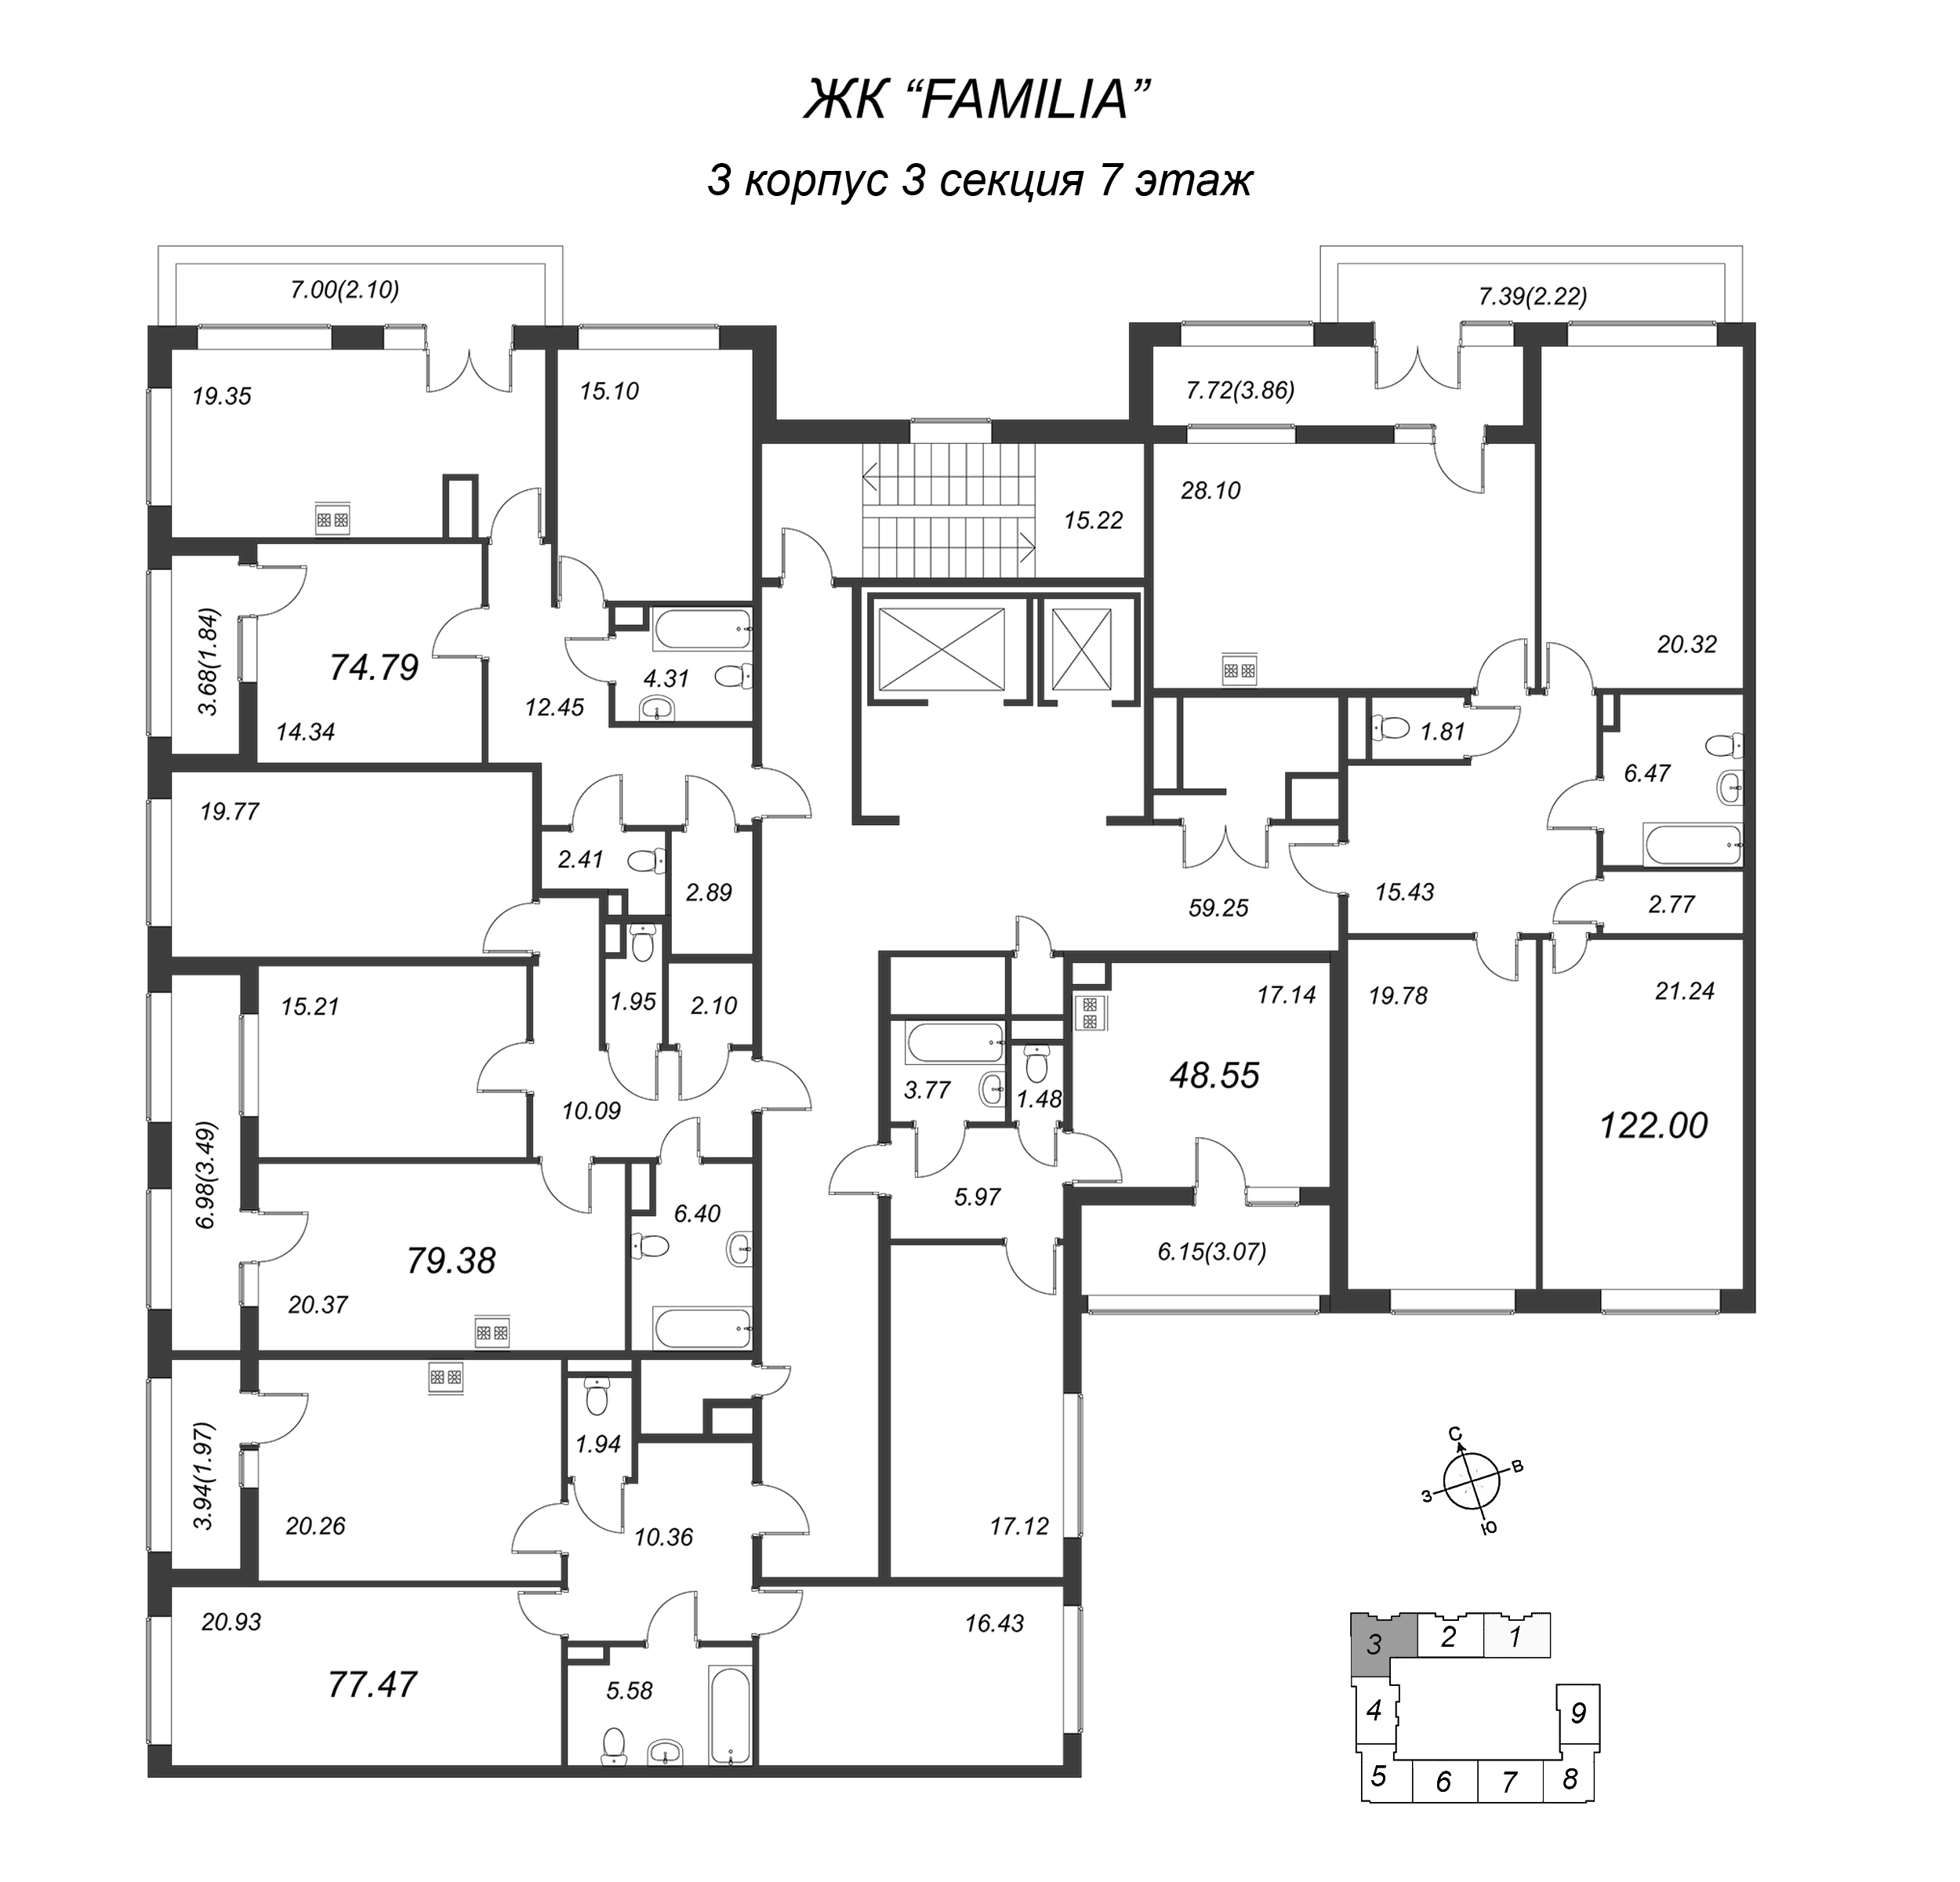 3-комнатная (Евро) квартира, 79.7 м² - планировка этажа